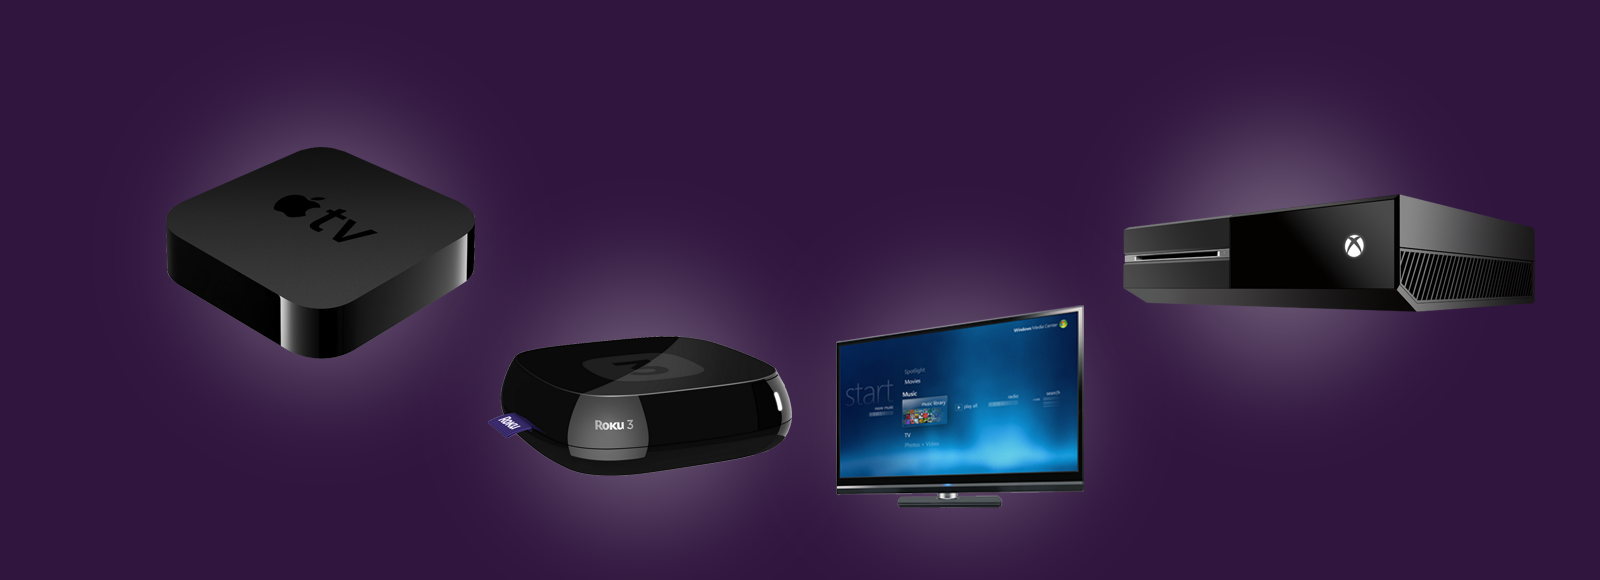 IR Universal Remotes for Apple TV - Xbox One - Roku - Windows Media Center